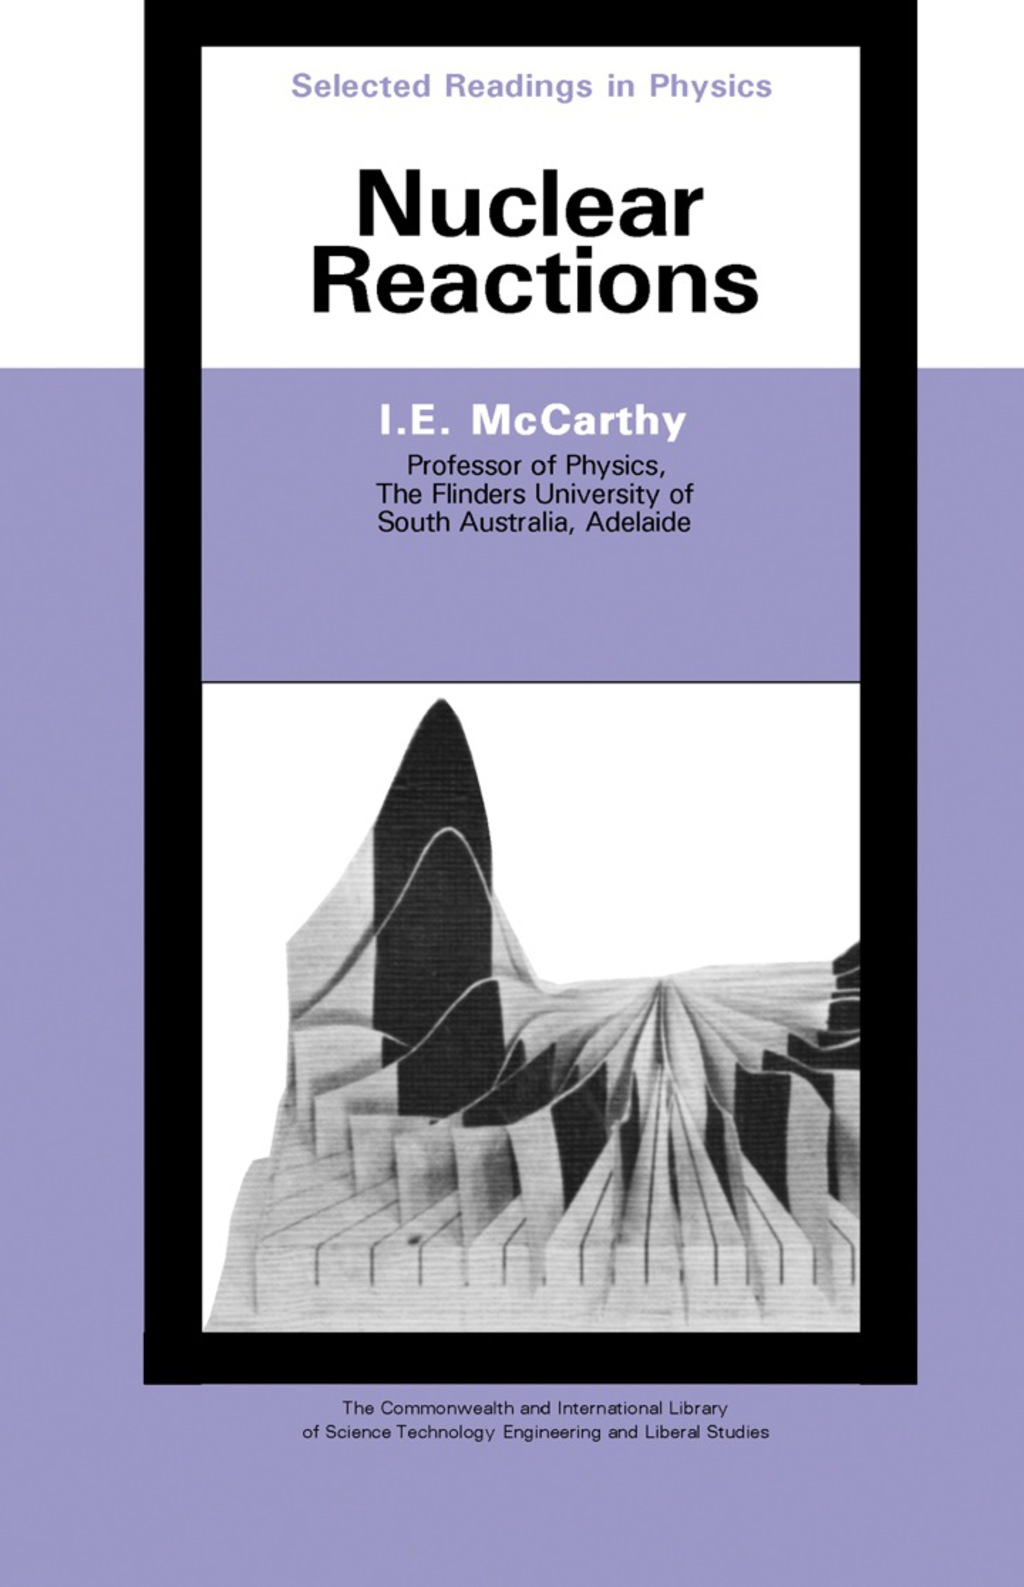 Nuclear Reactions (eBook) - I. E. McCarthy